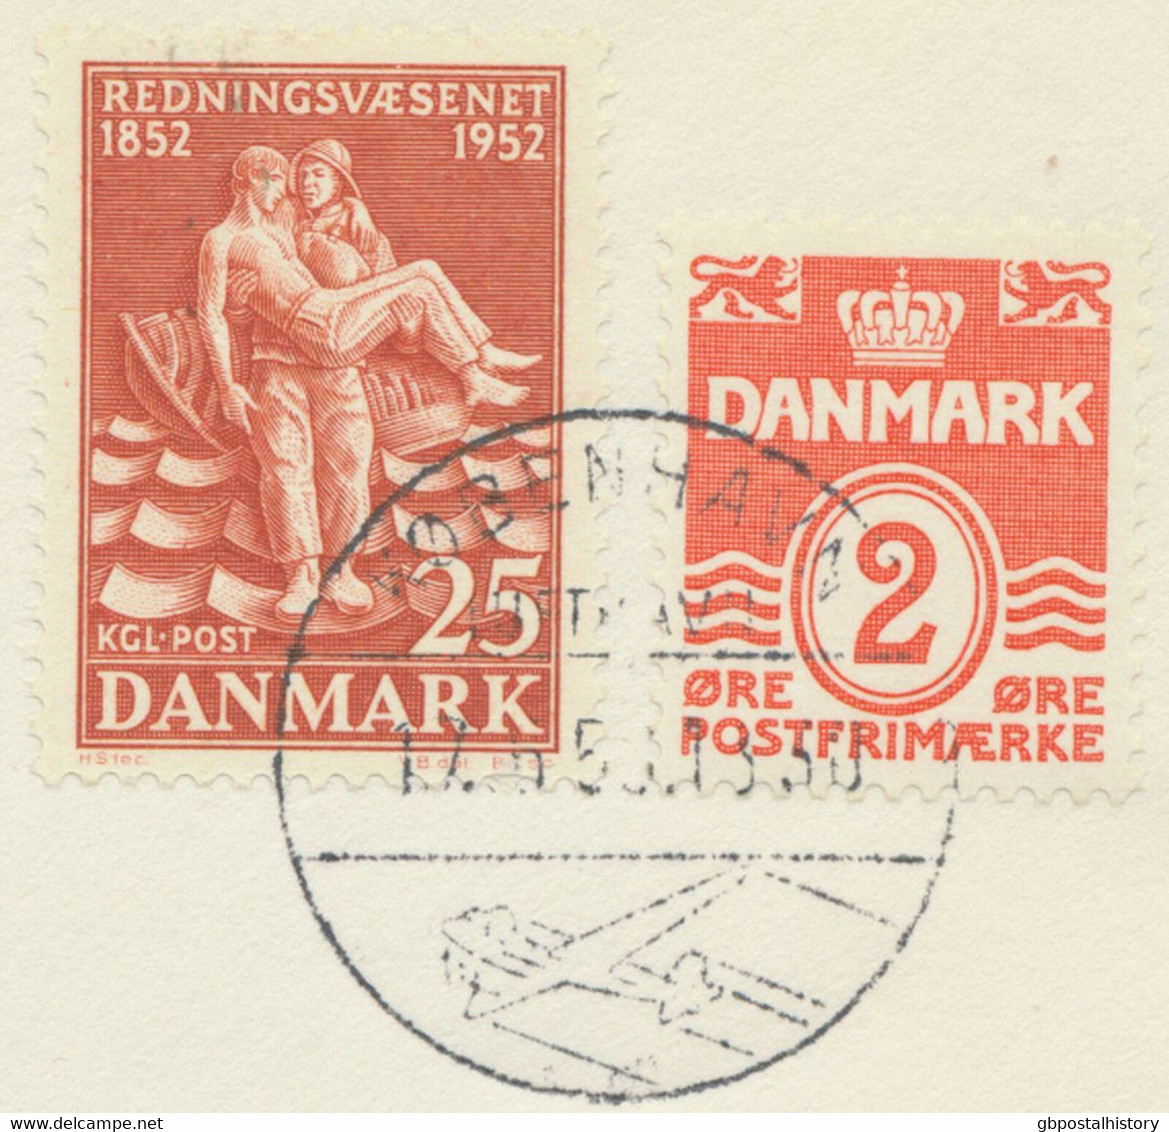 DENMARK 1959 First Flight SAS First Caravelle Jet Flight COPENHAGEN - DÜSSELDORF - Poste Aérienne